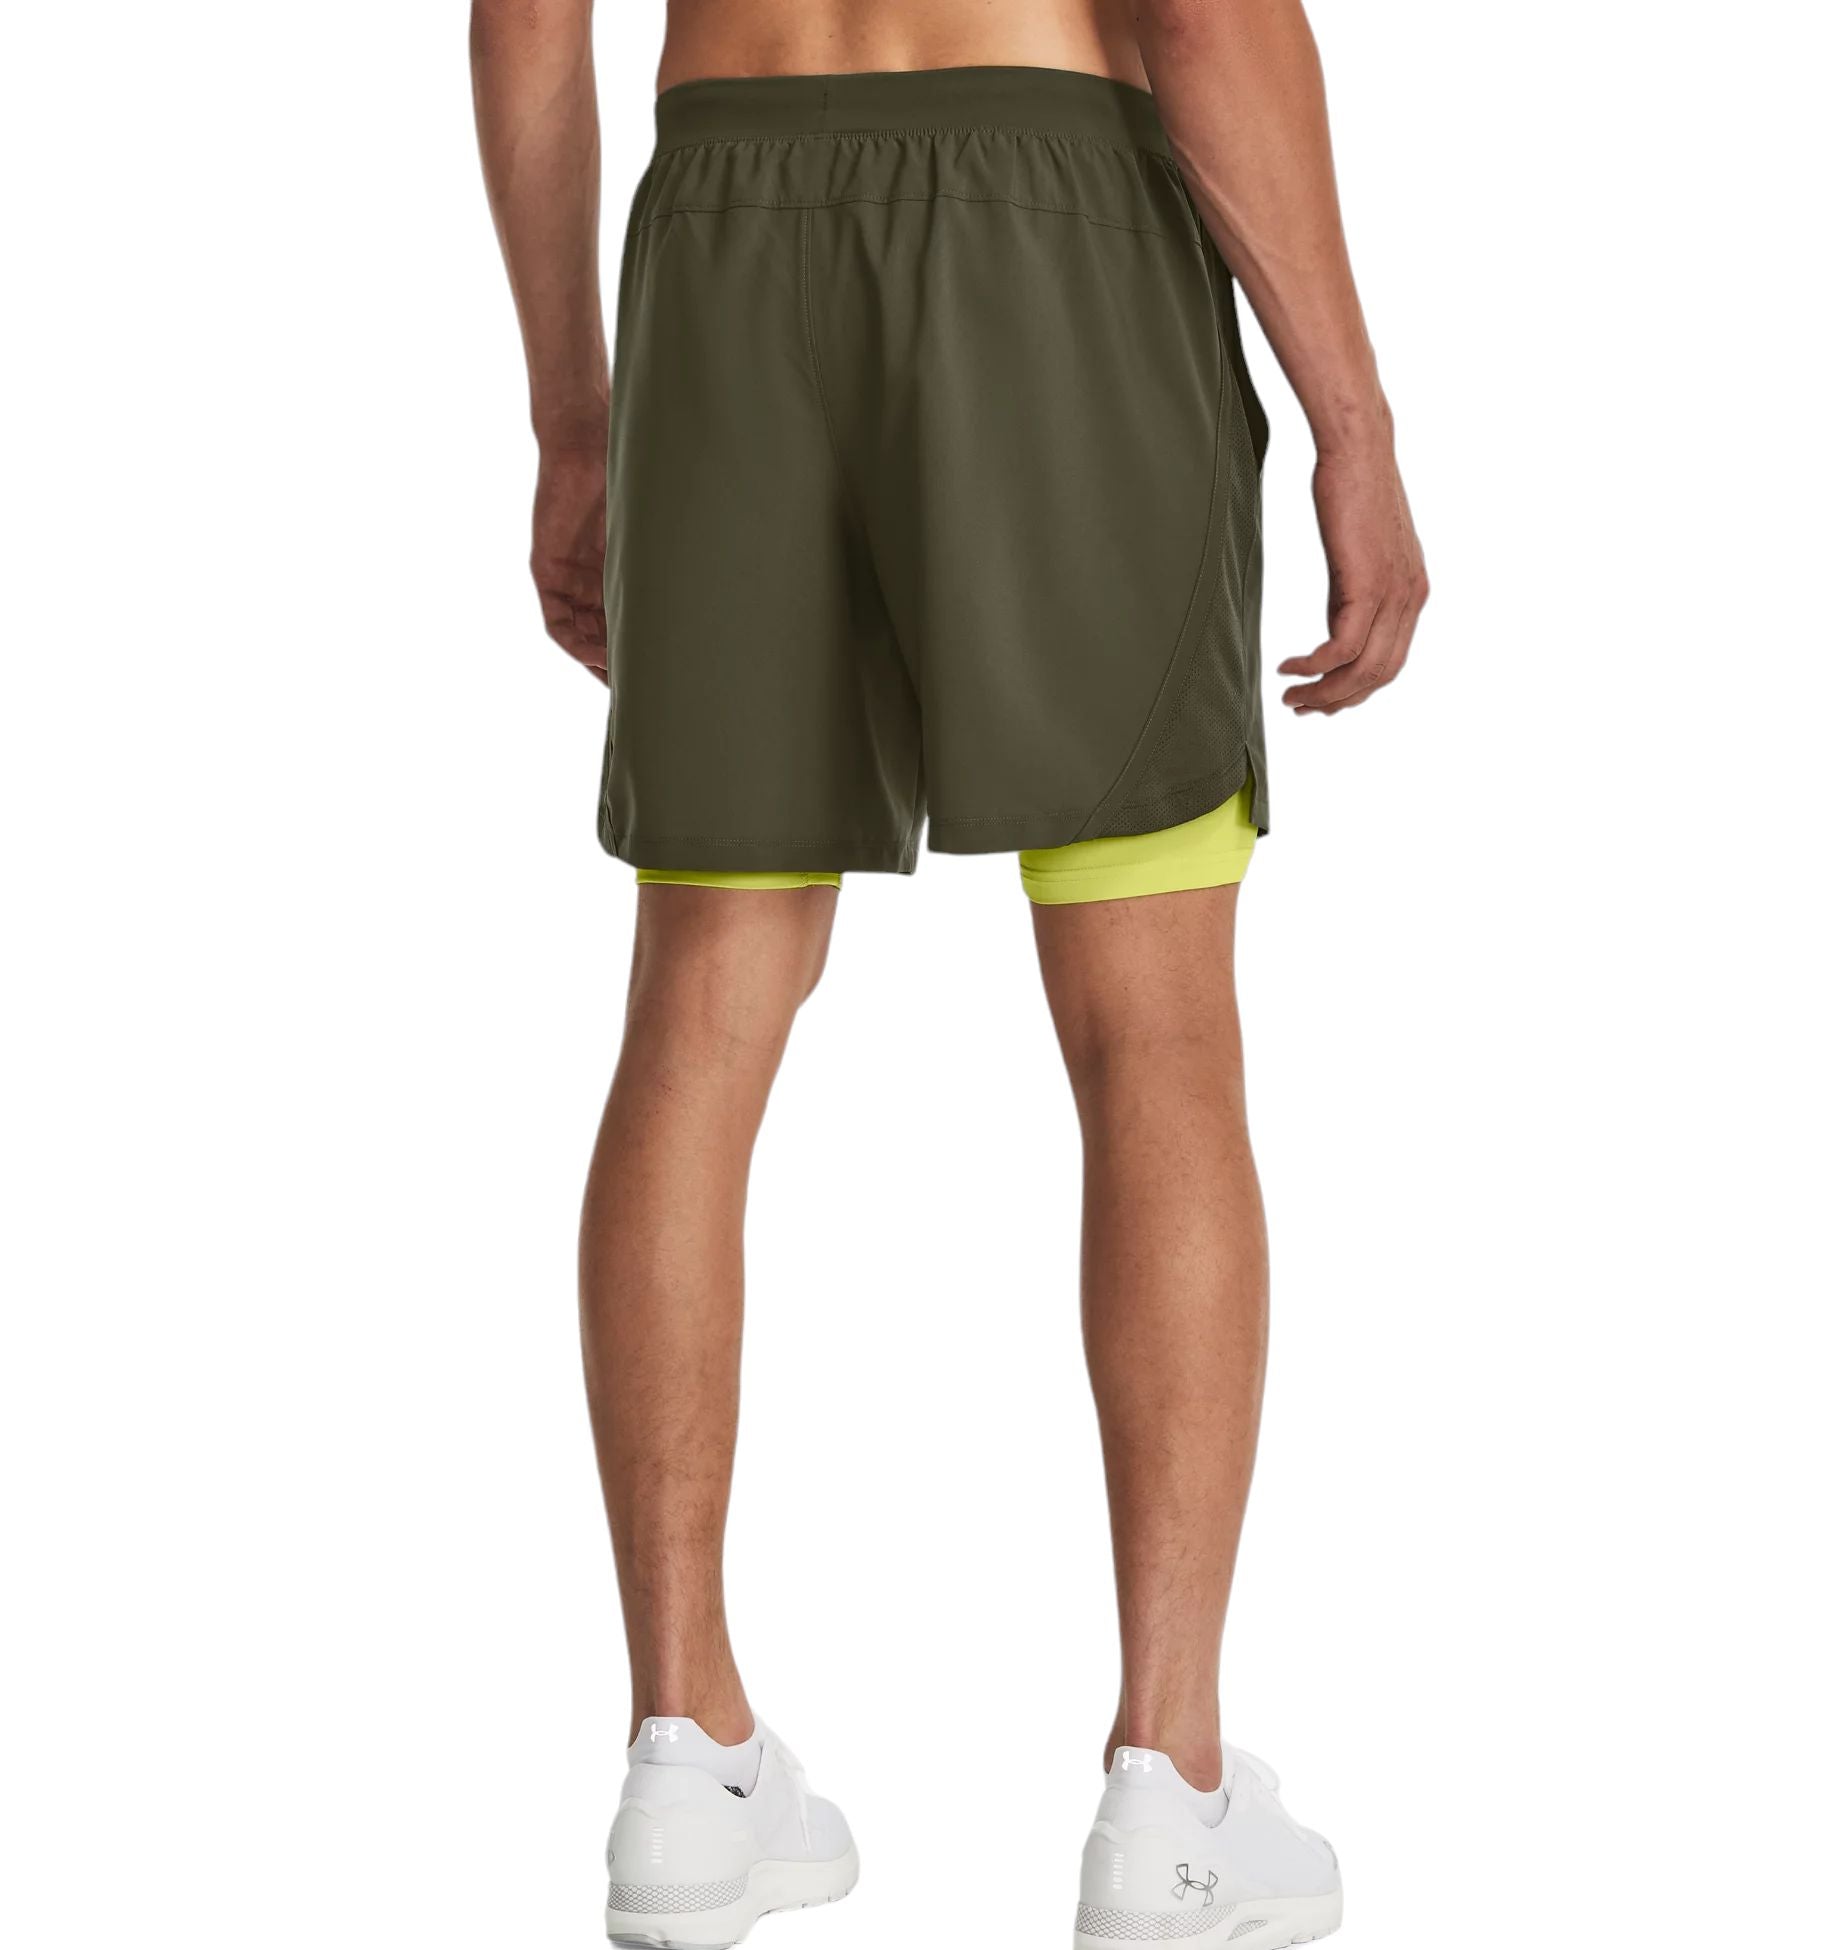 Men's Launch Run 2-in-1 Shorts Marine Green/Lime Yellow/Reflective 